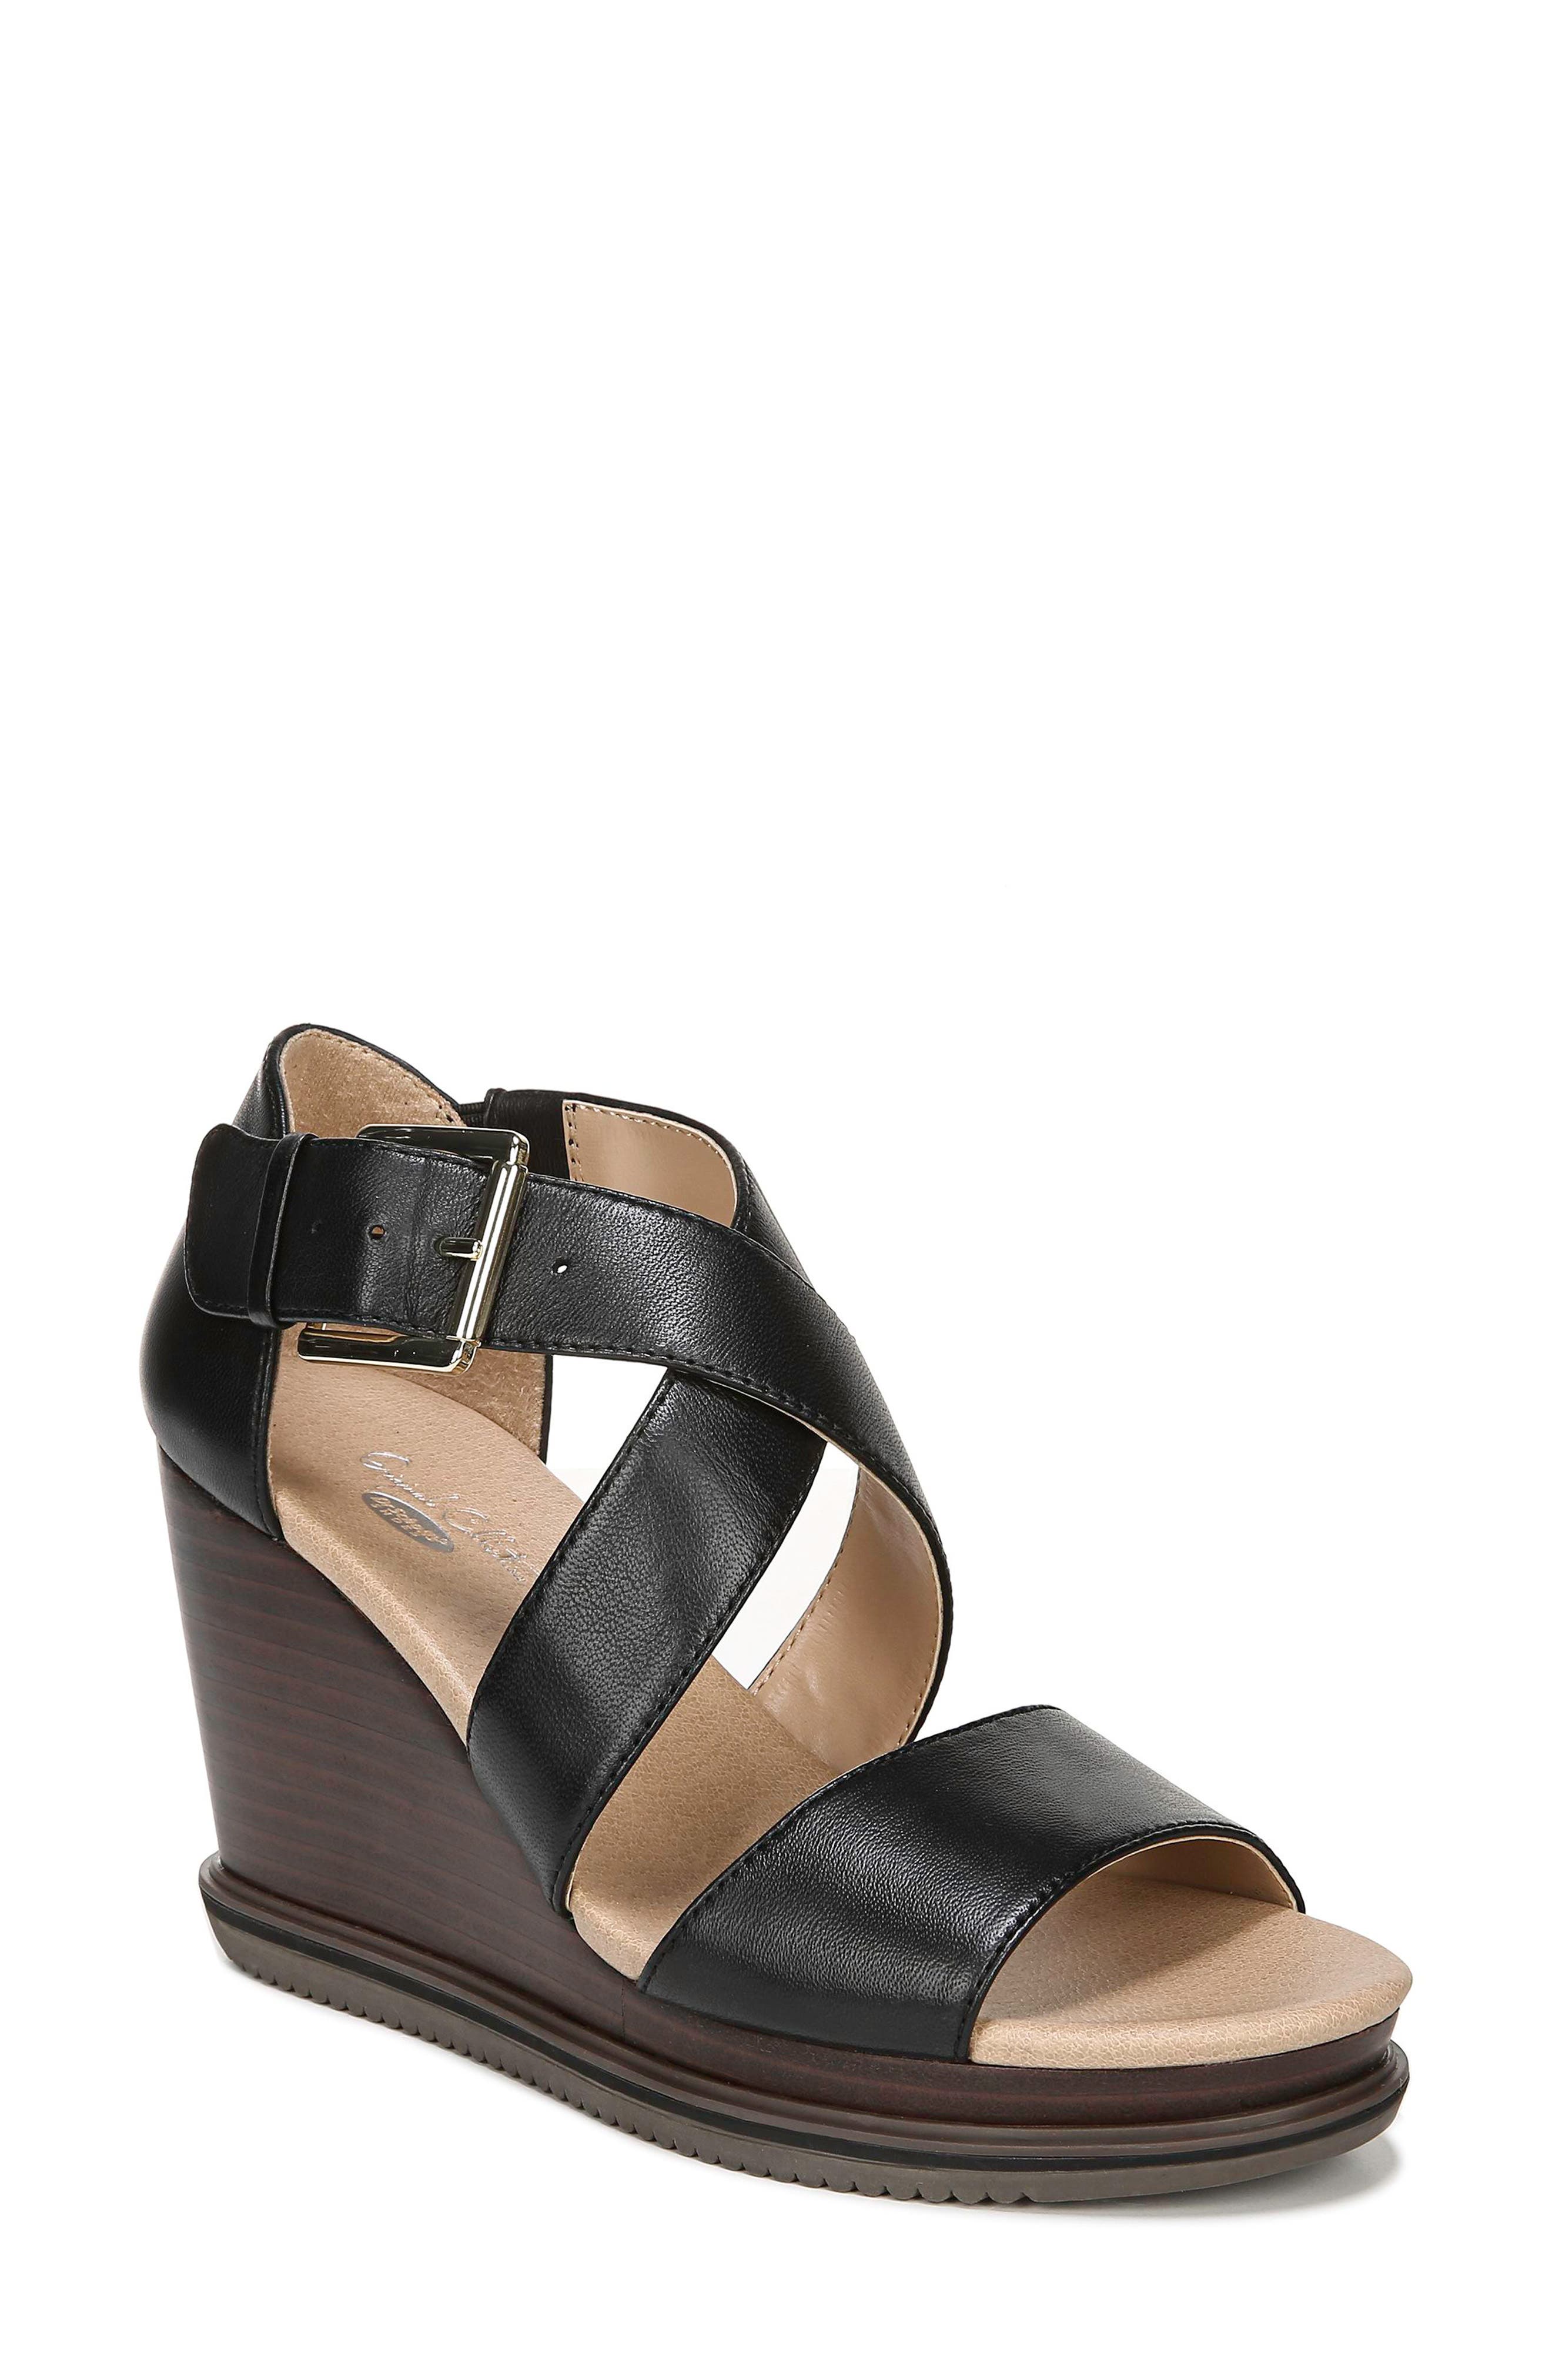 UPC 742976000096 product image for Women's Dr. Scholl's Sweet Escape Wedge Sandal, Size 8.5 M - Black | upcitemdb.com